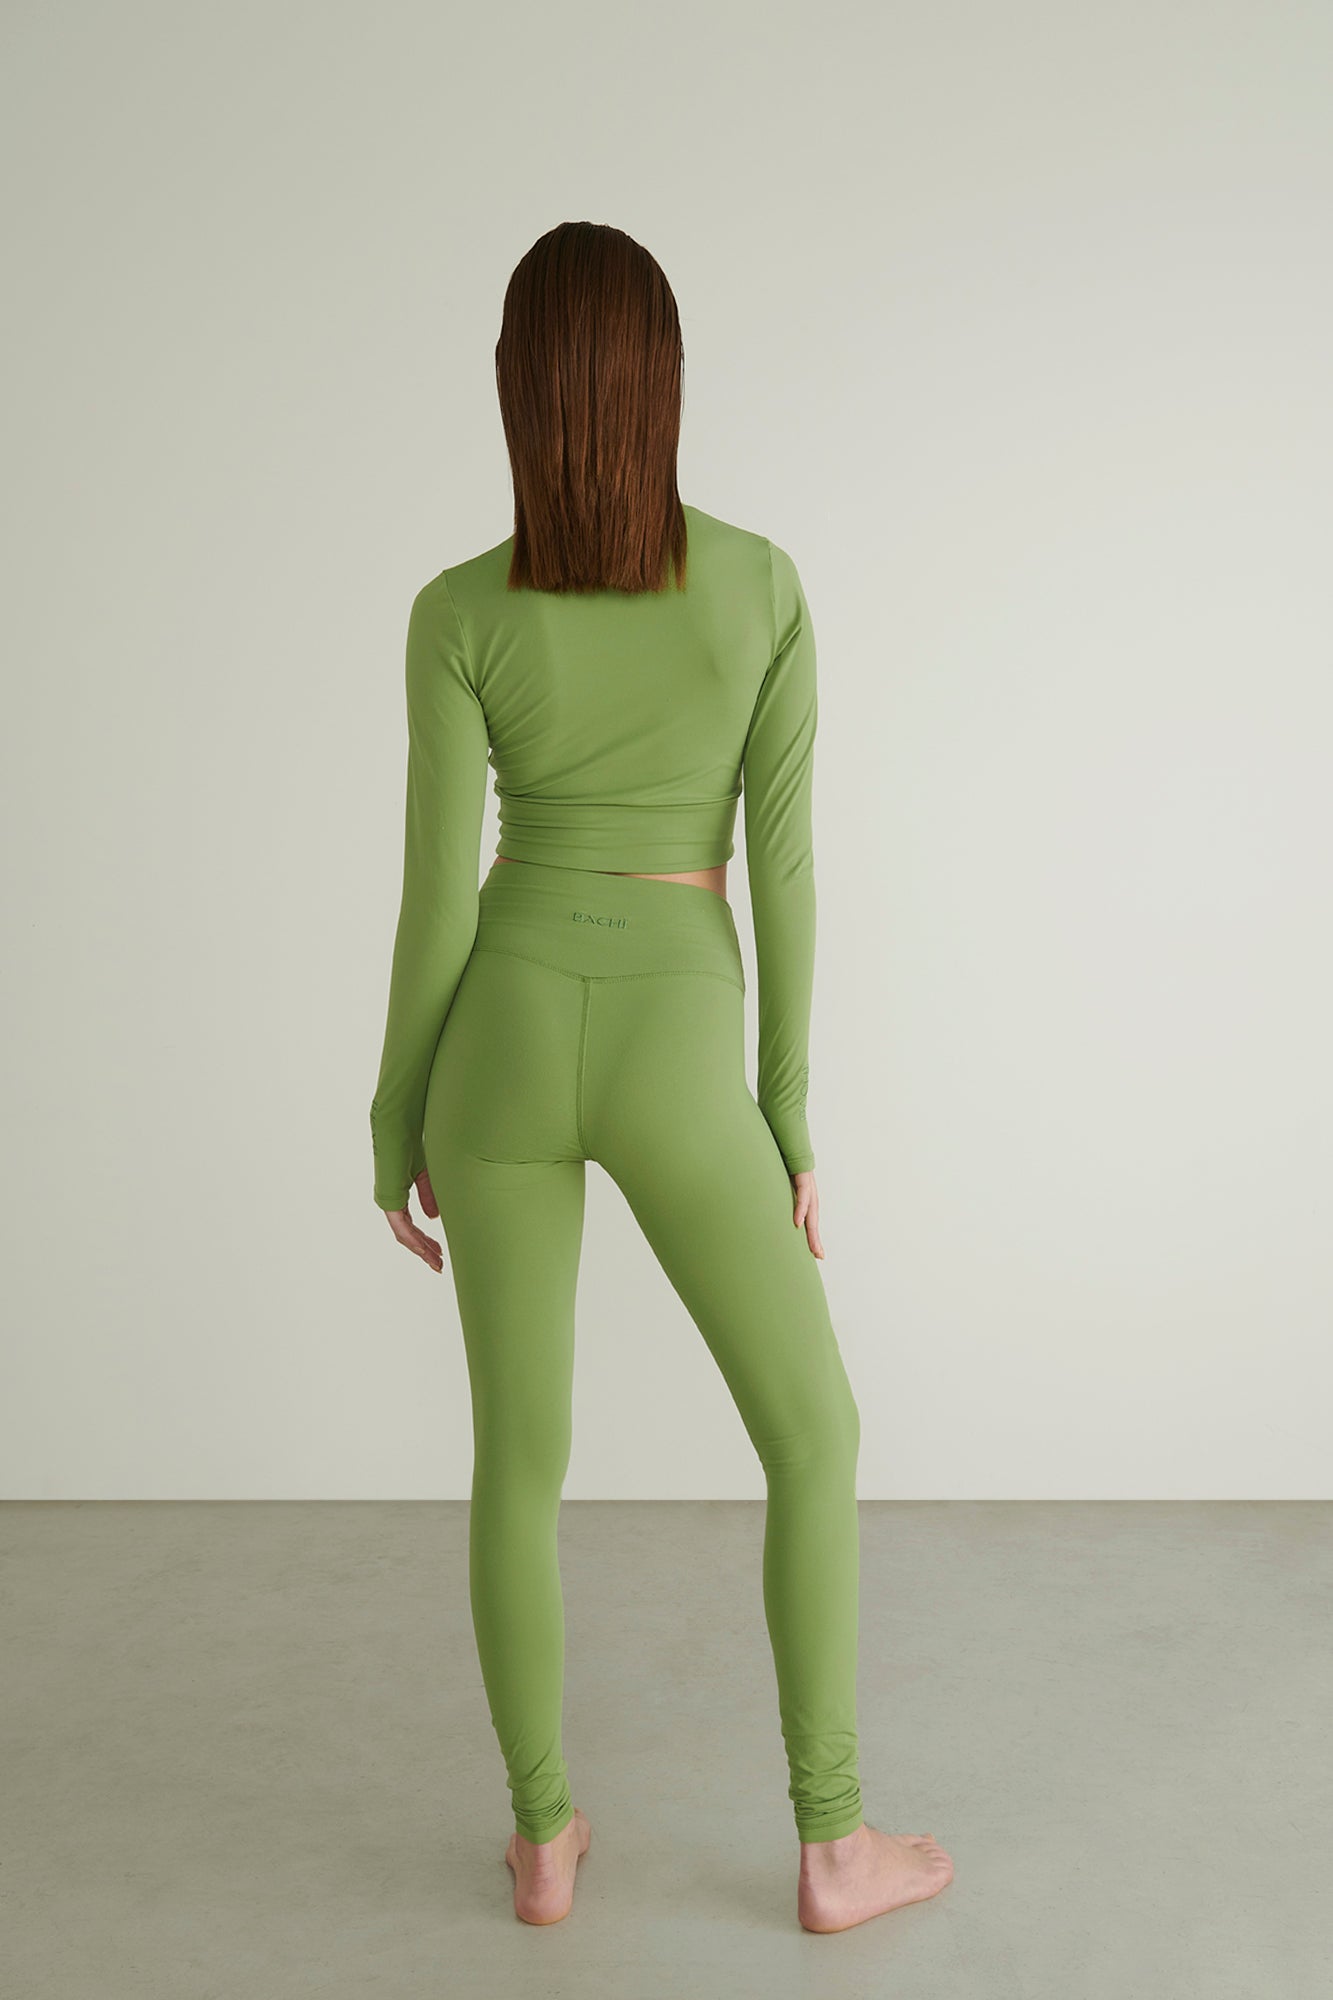 Model Wearing Green Legging and Green Crop Top 